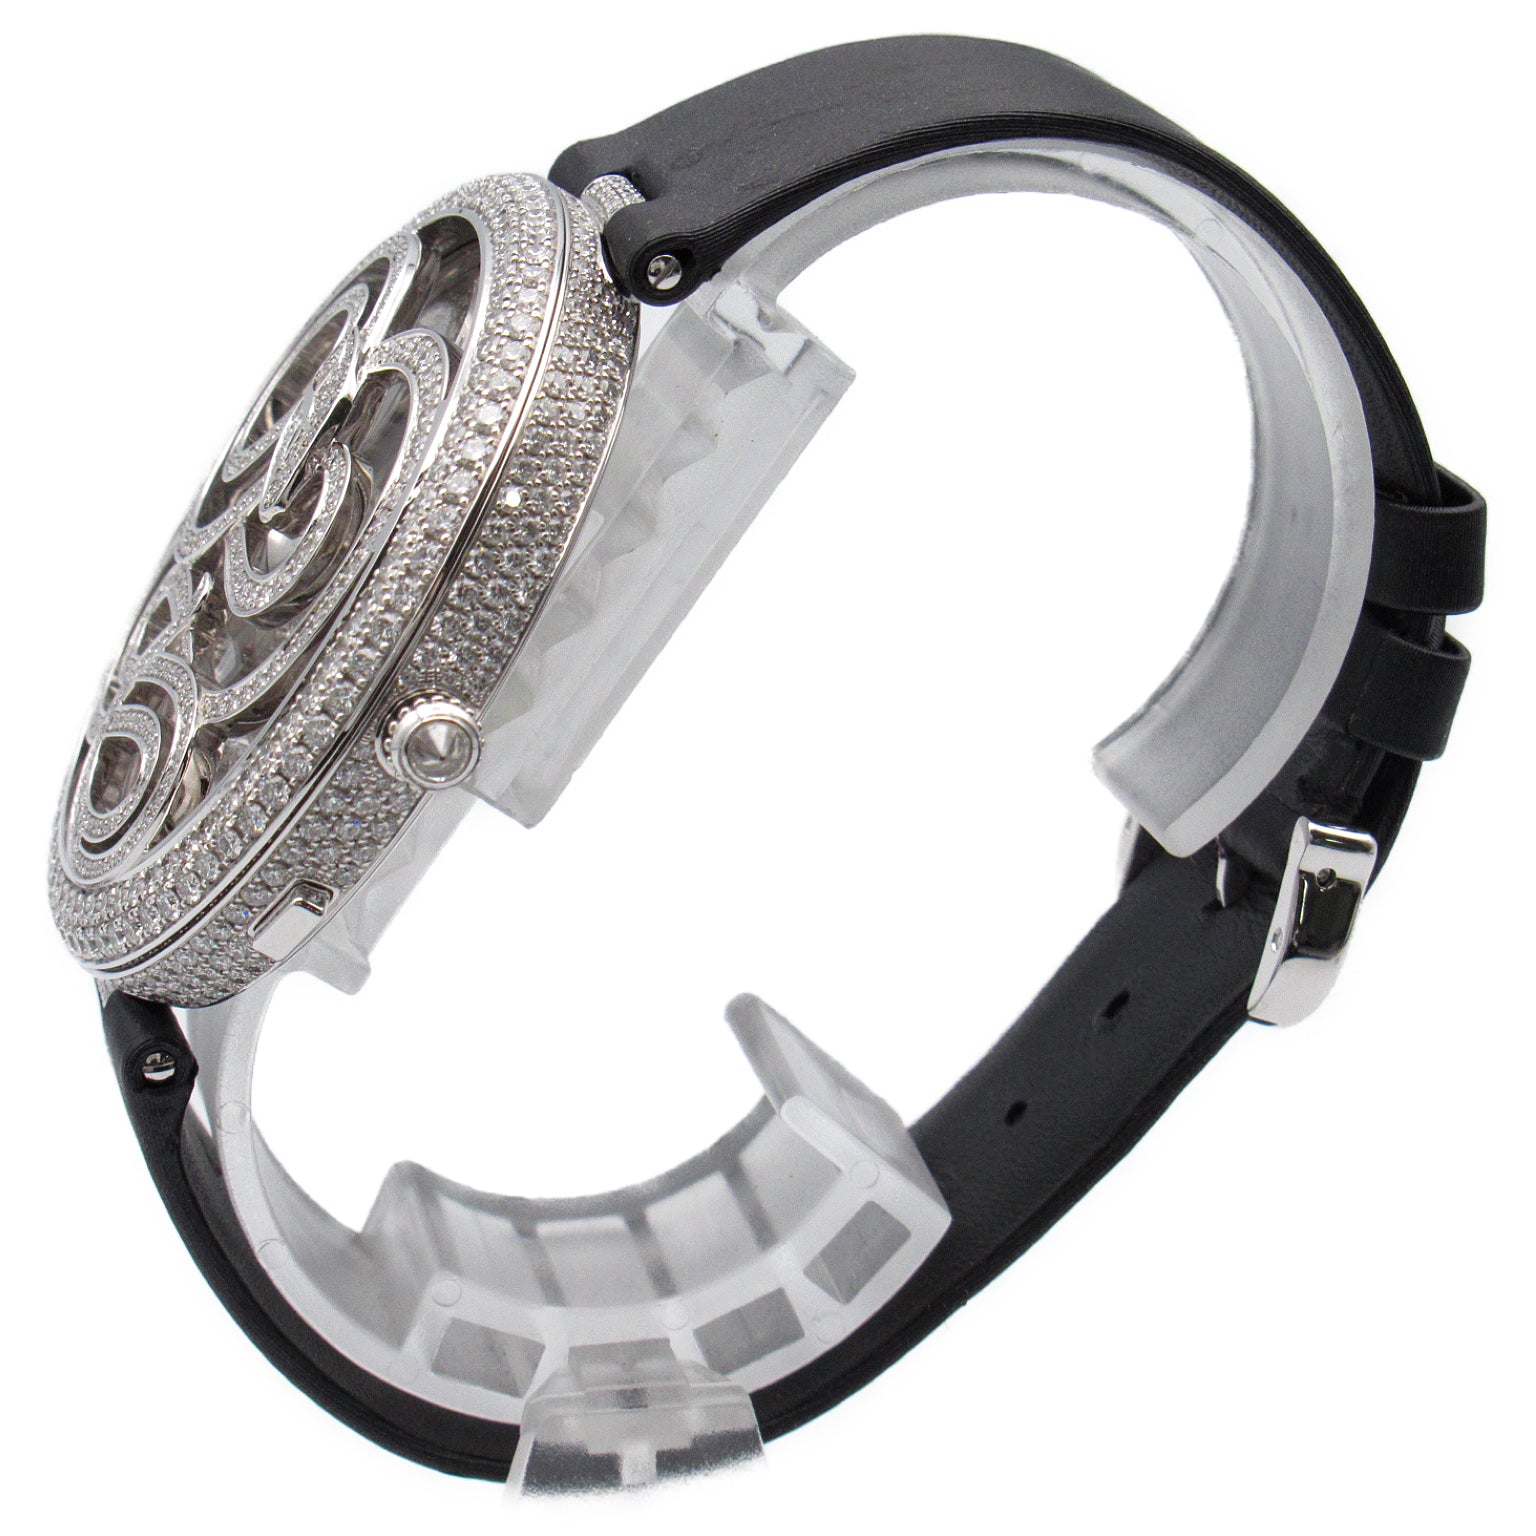 Cartier Cartier Animale du Cartier Limited (05/40) Watch Watch K18WG (White G)  Leather Belt HPI00339 Black